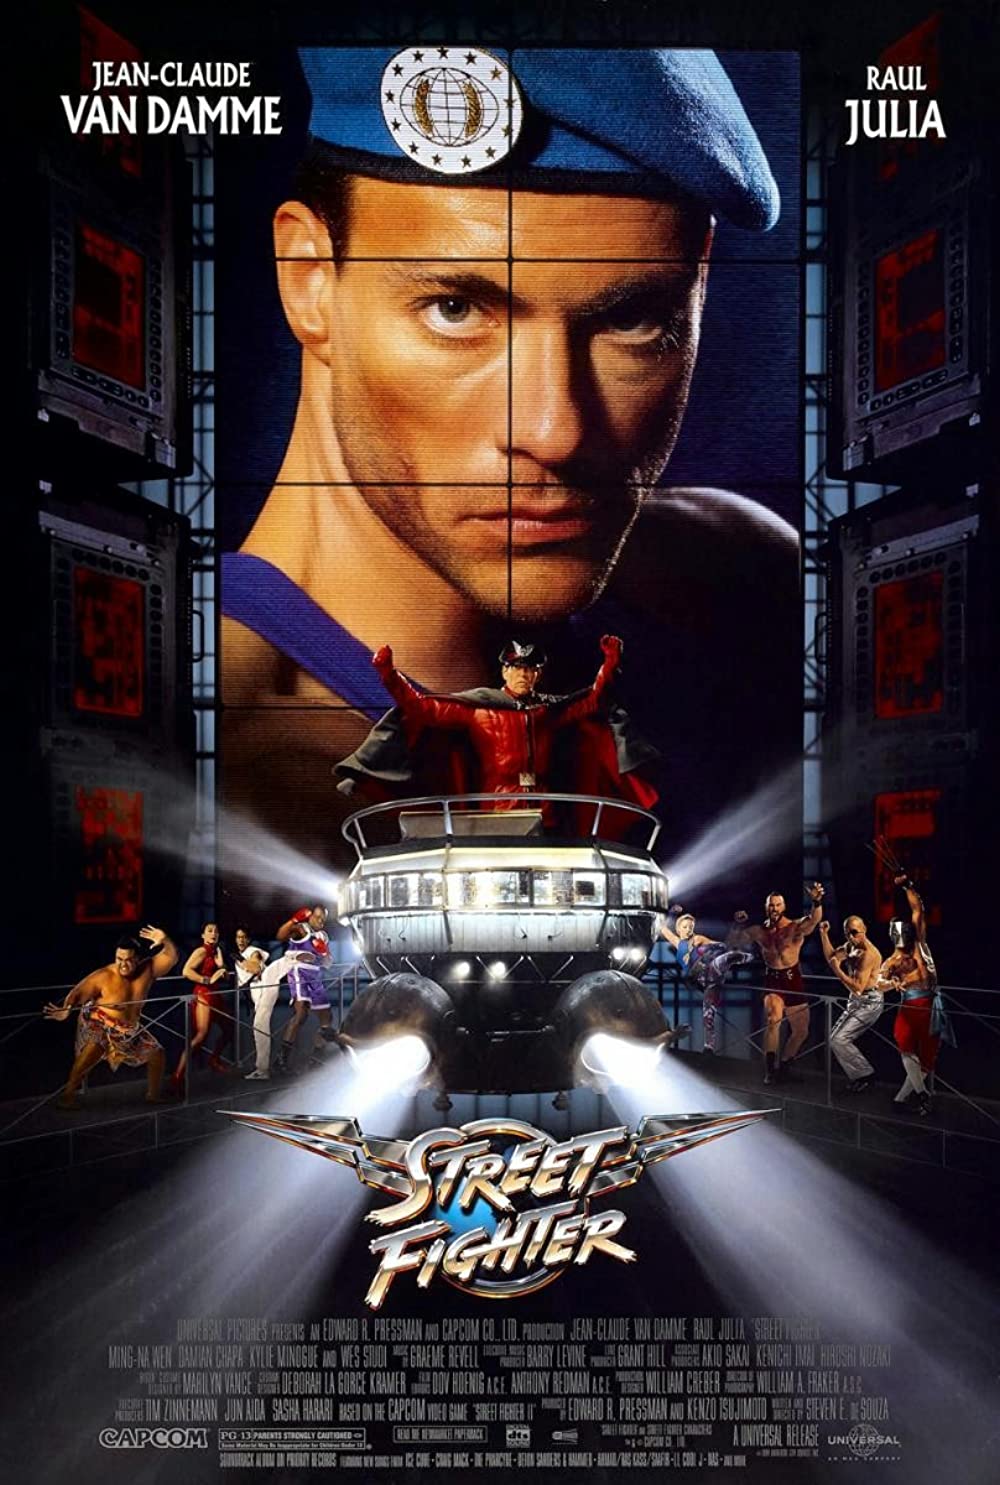 Filmbeschreibung zu Street Fighter